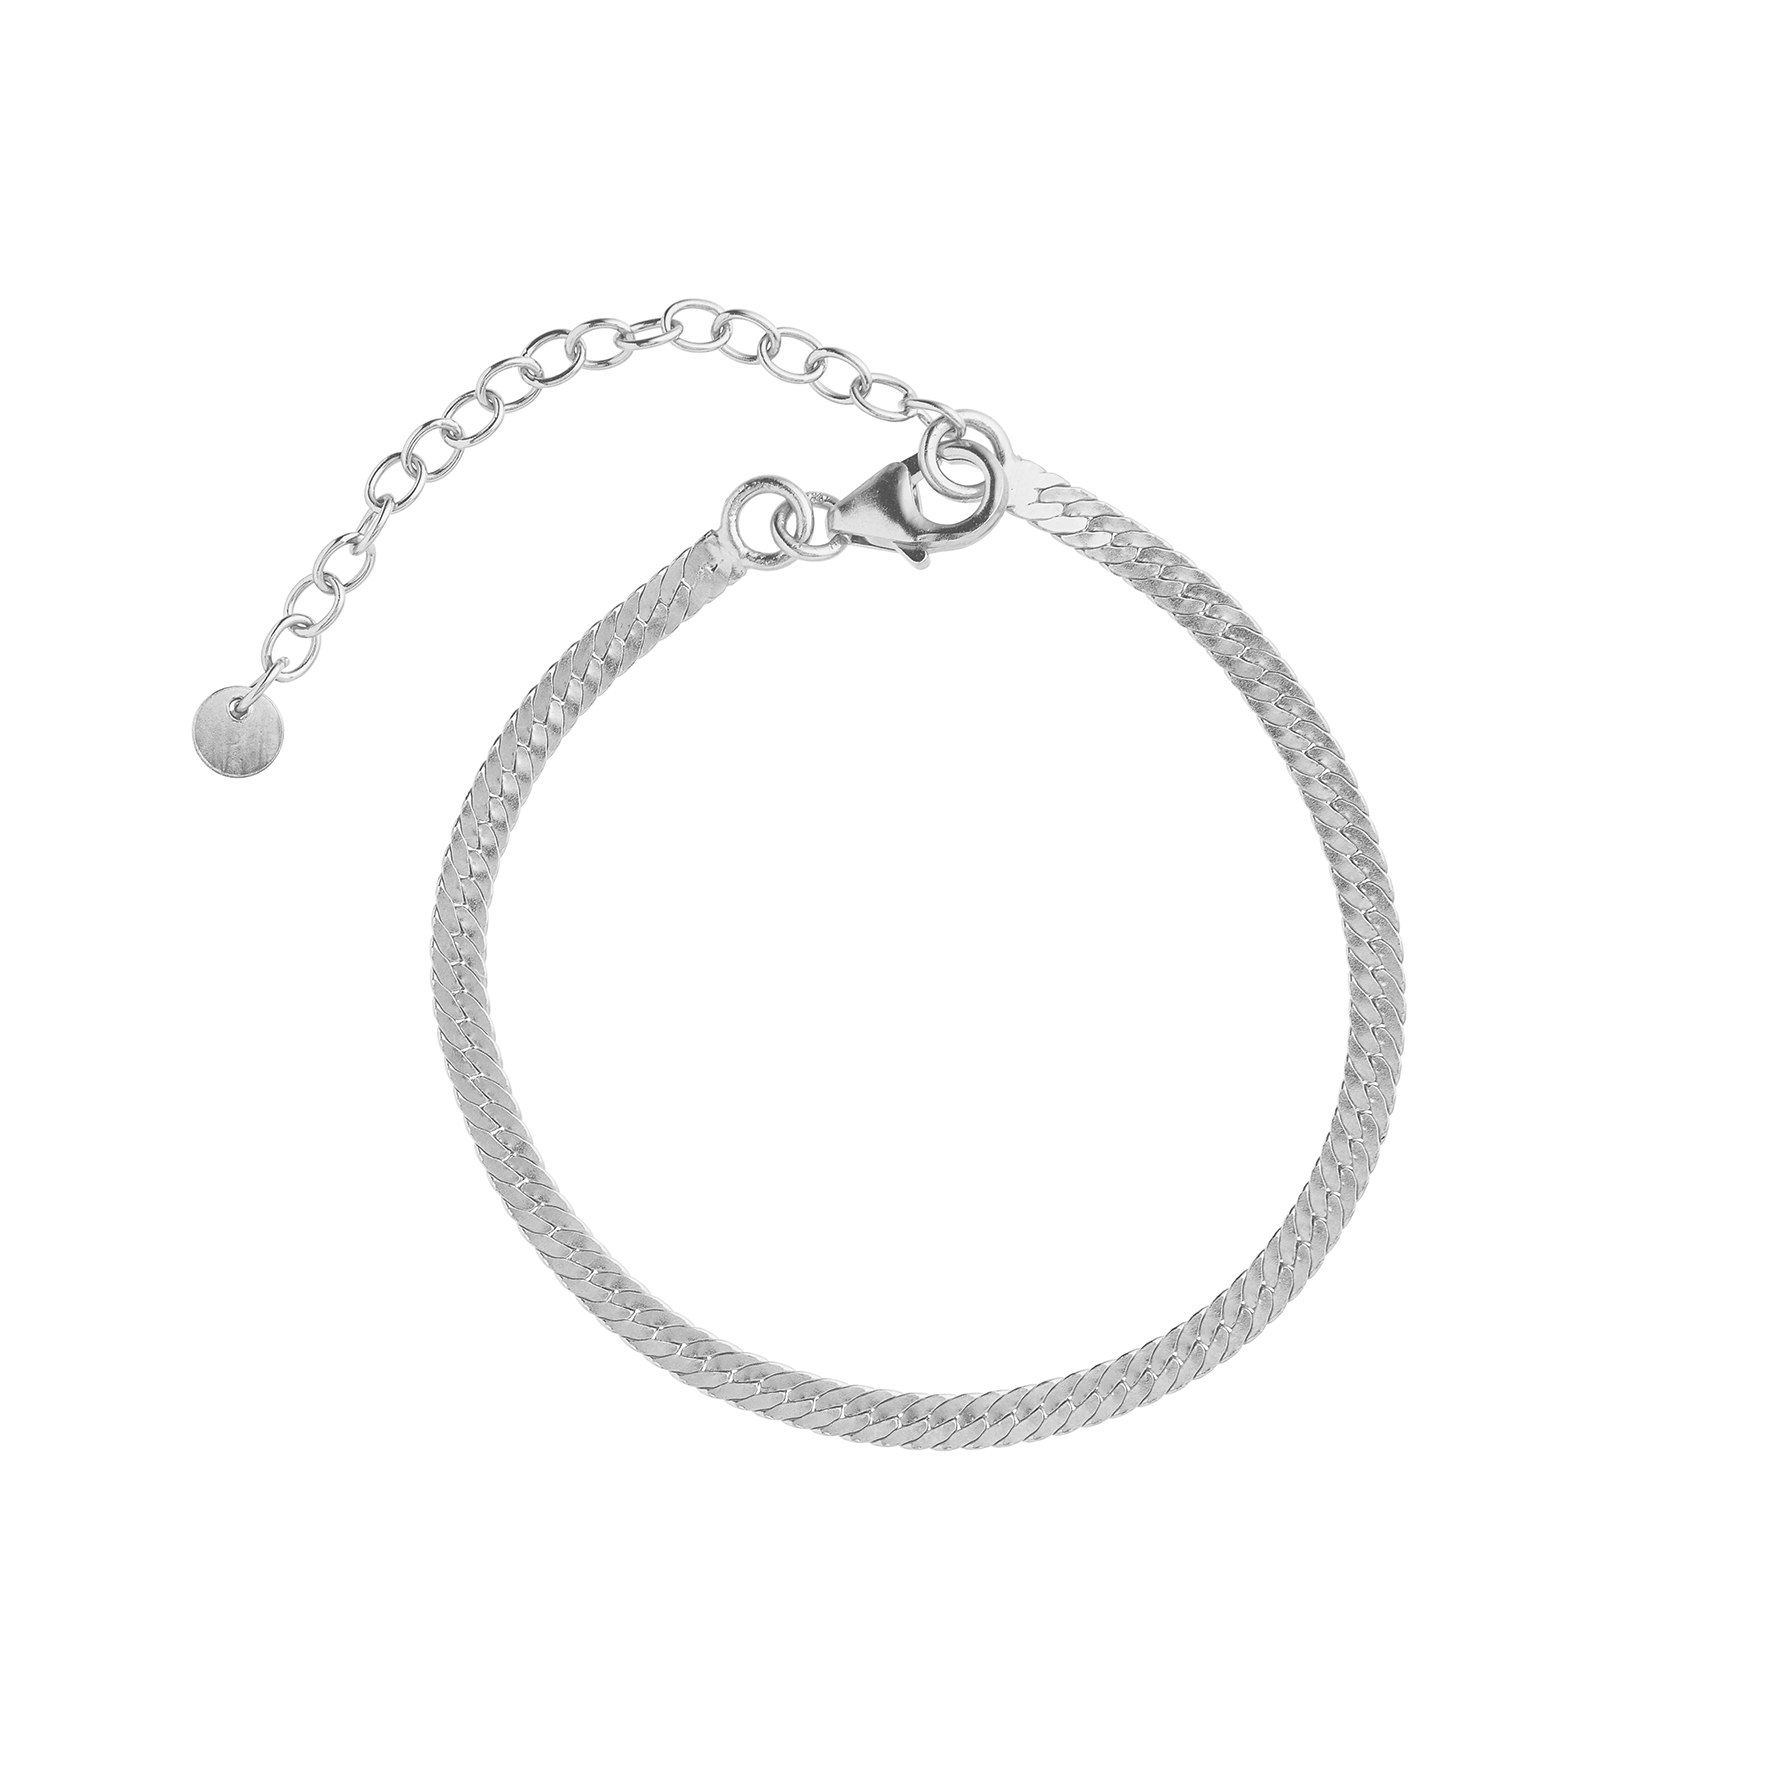 Snake Bracelet from STINE A Jewelry in Silver Sterling 925